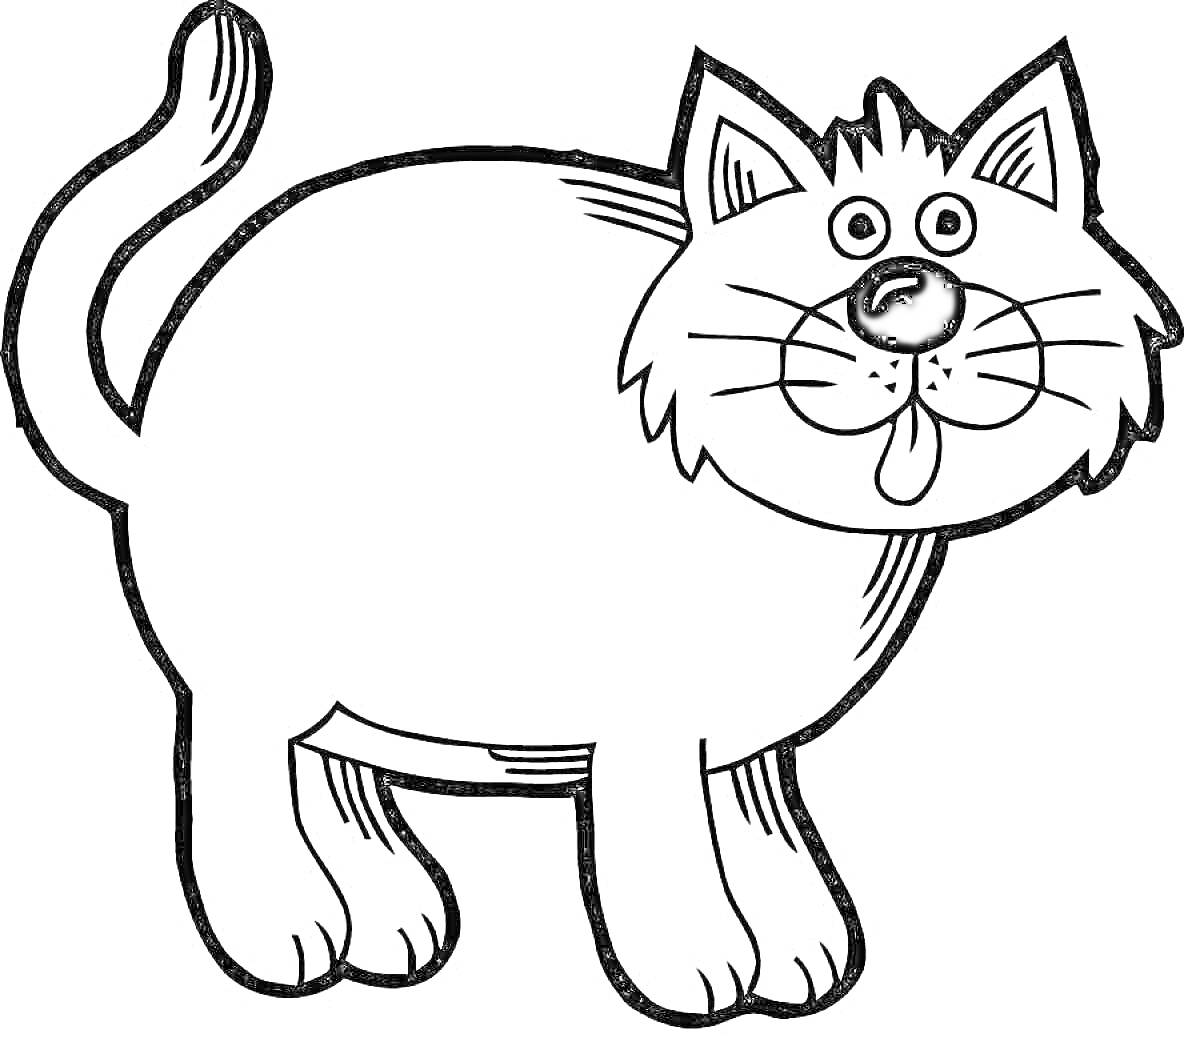 Раскраска Круглая кошка с высунутым языком